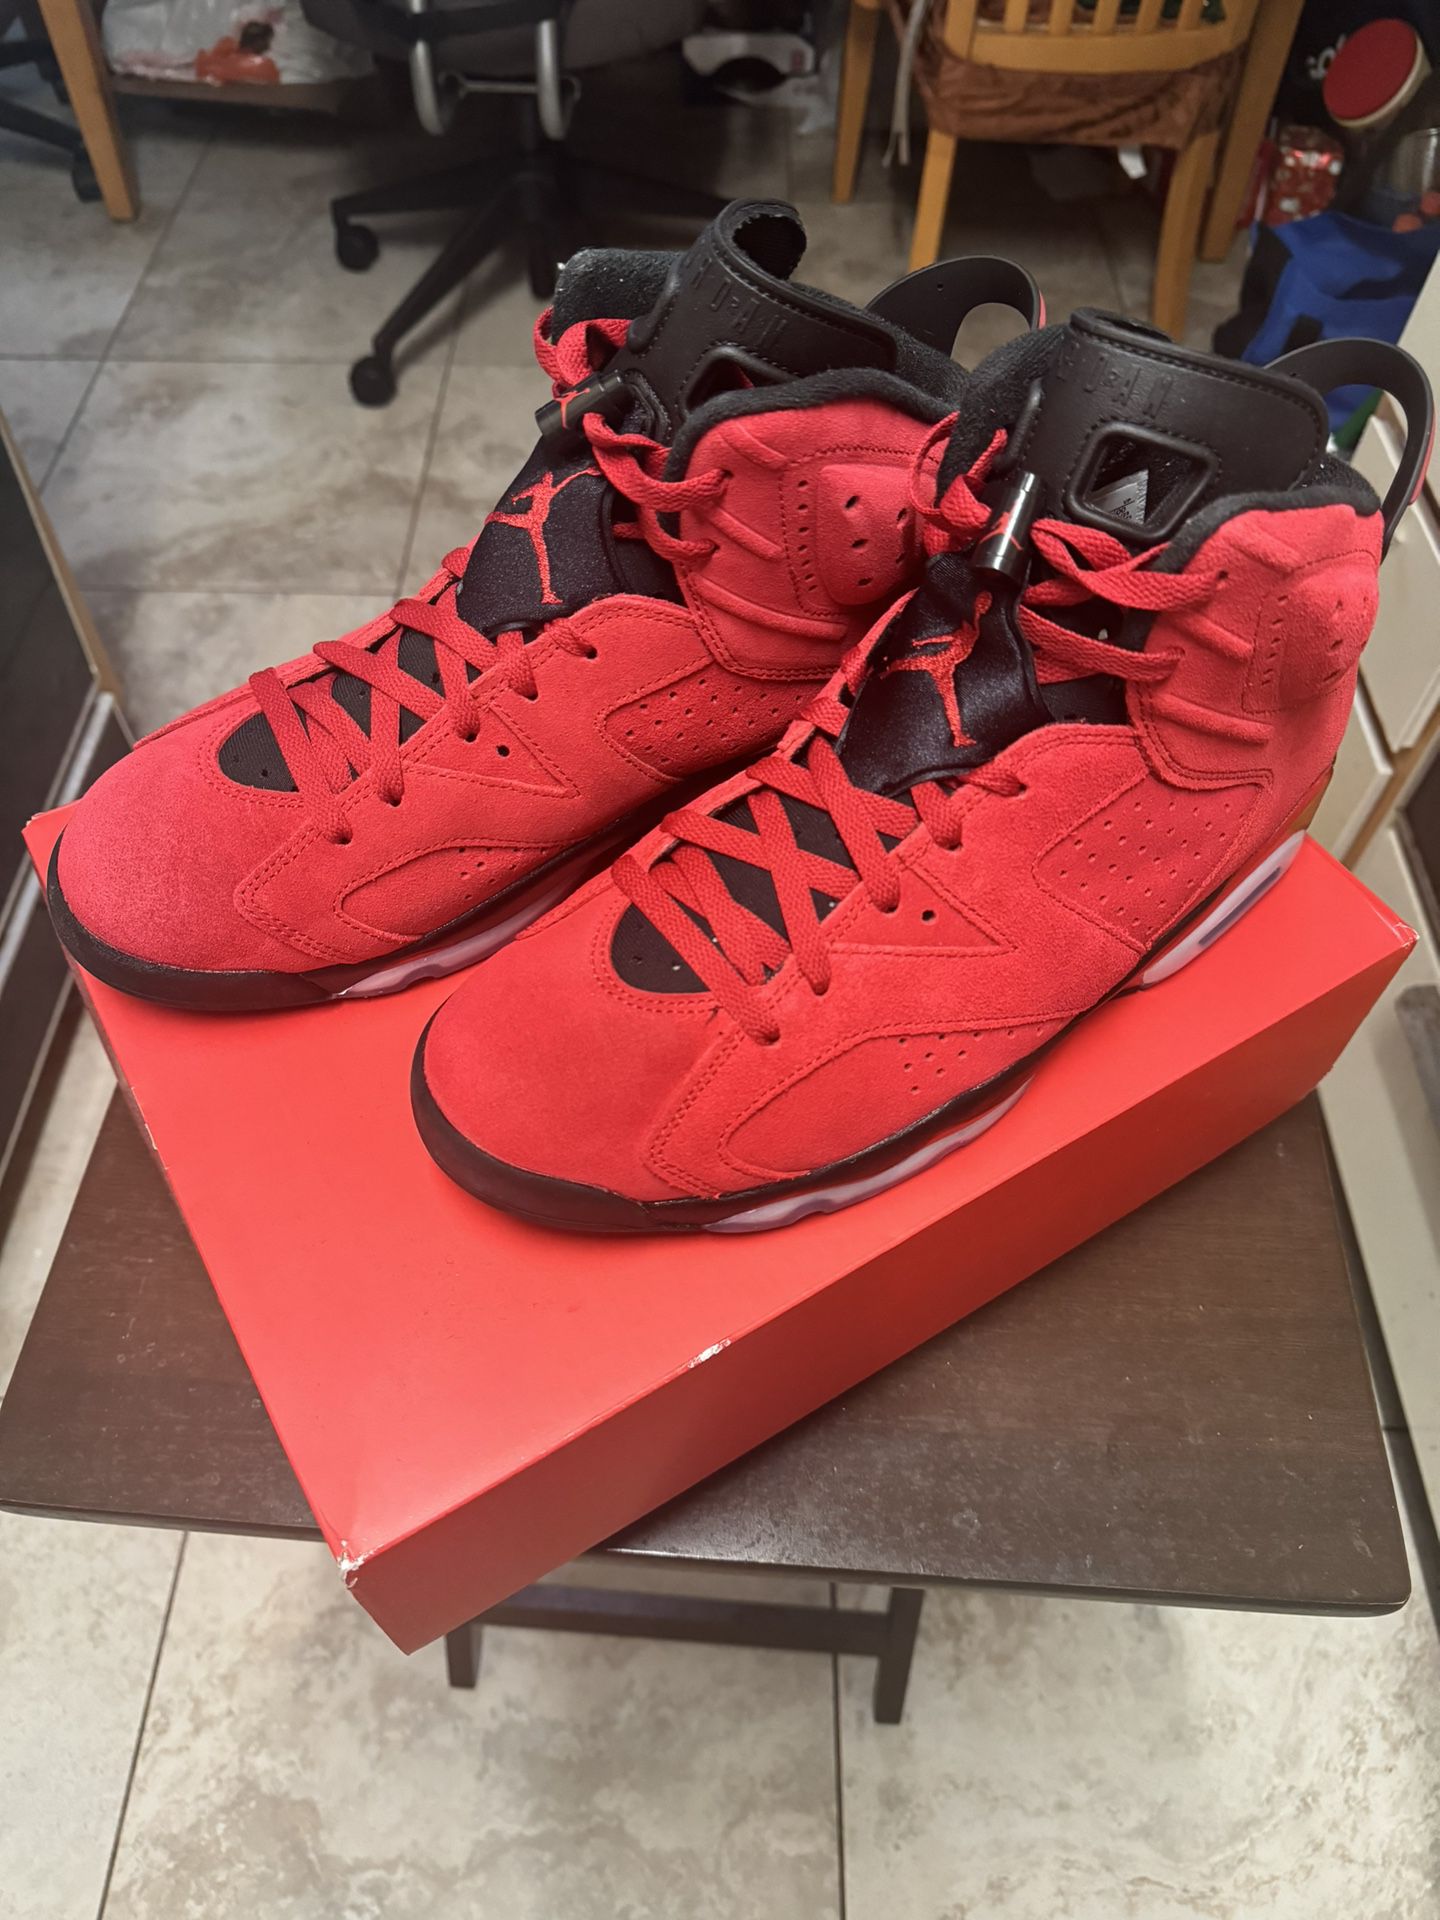 Jordan 6 Red Toro - Size 12